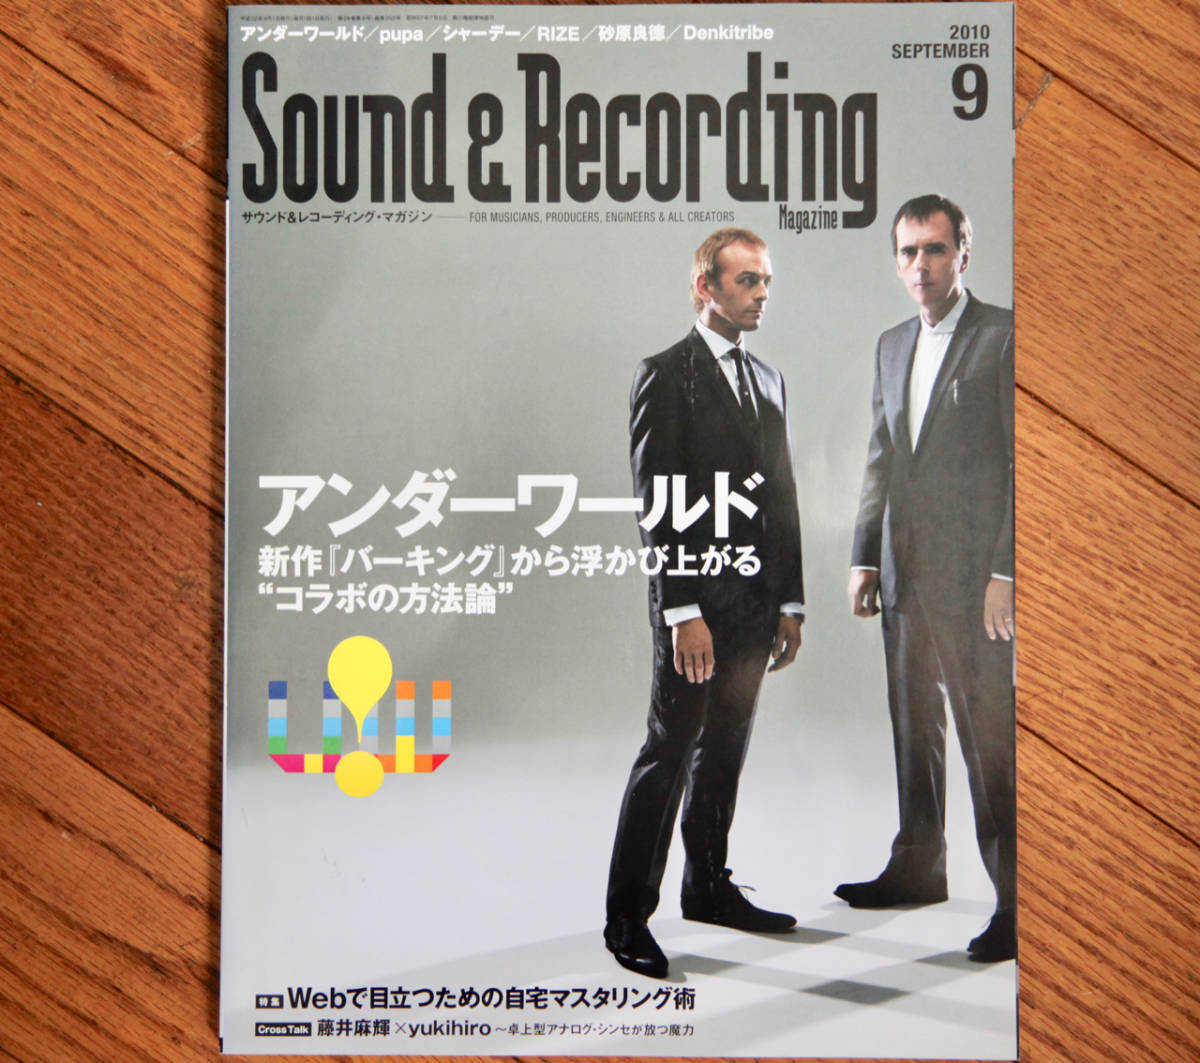 Sound & Recording Magazine ( sound and recording magazine ) 2010 year 09 month number / used music magazine 